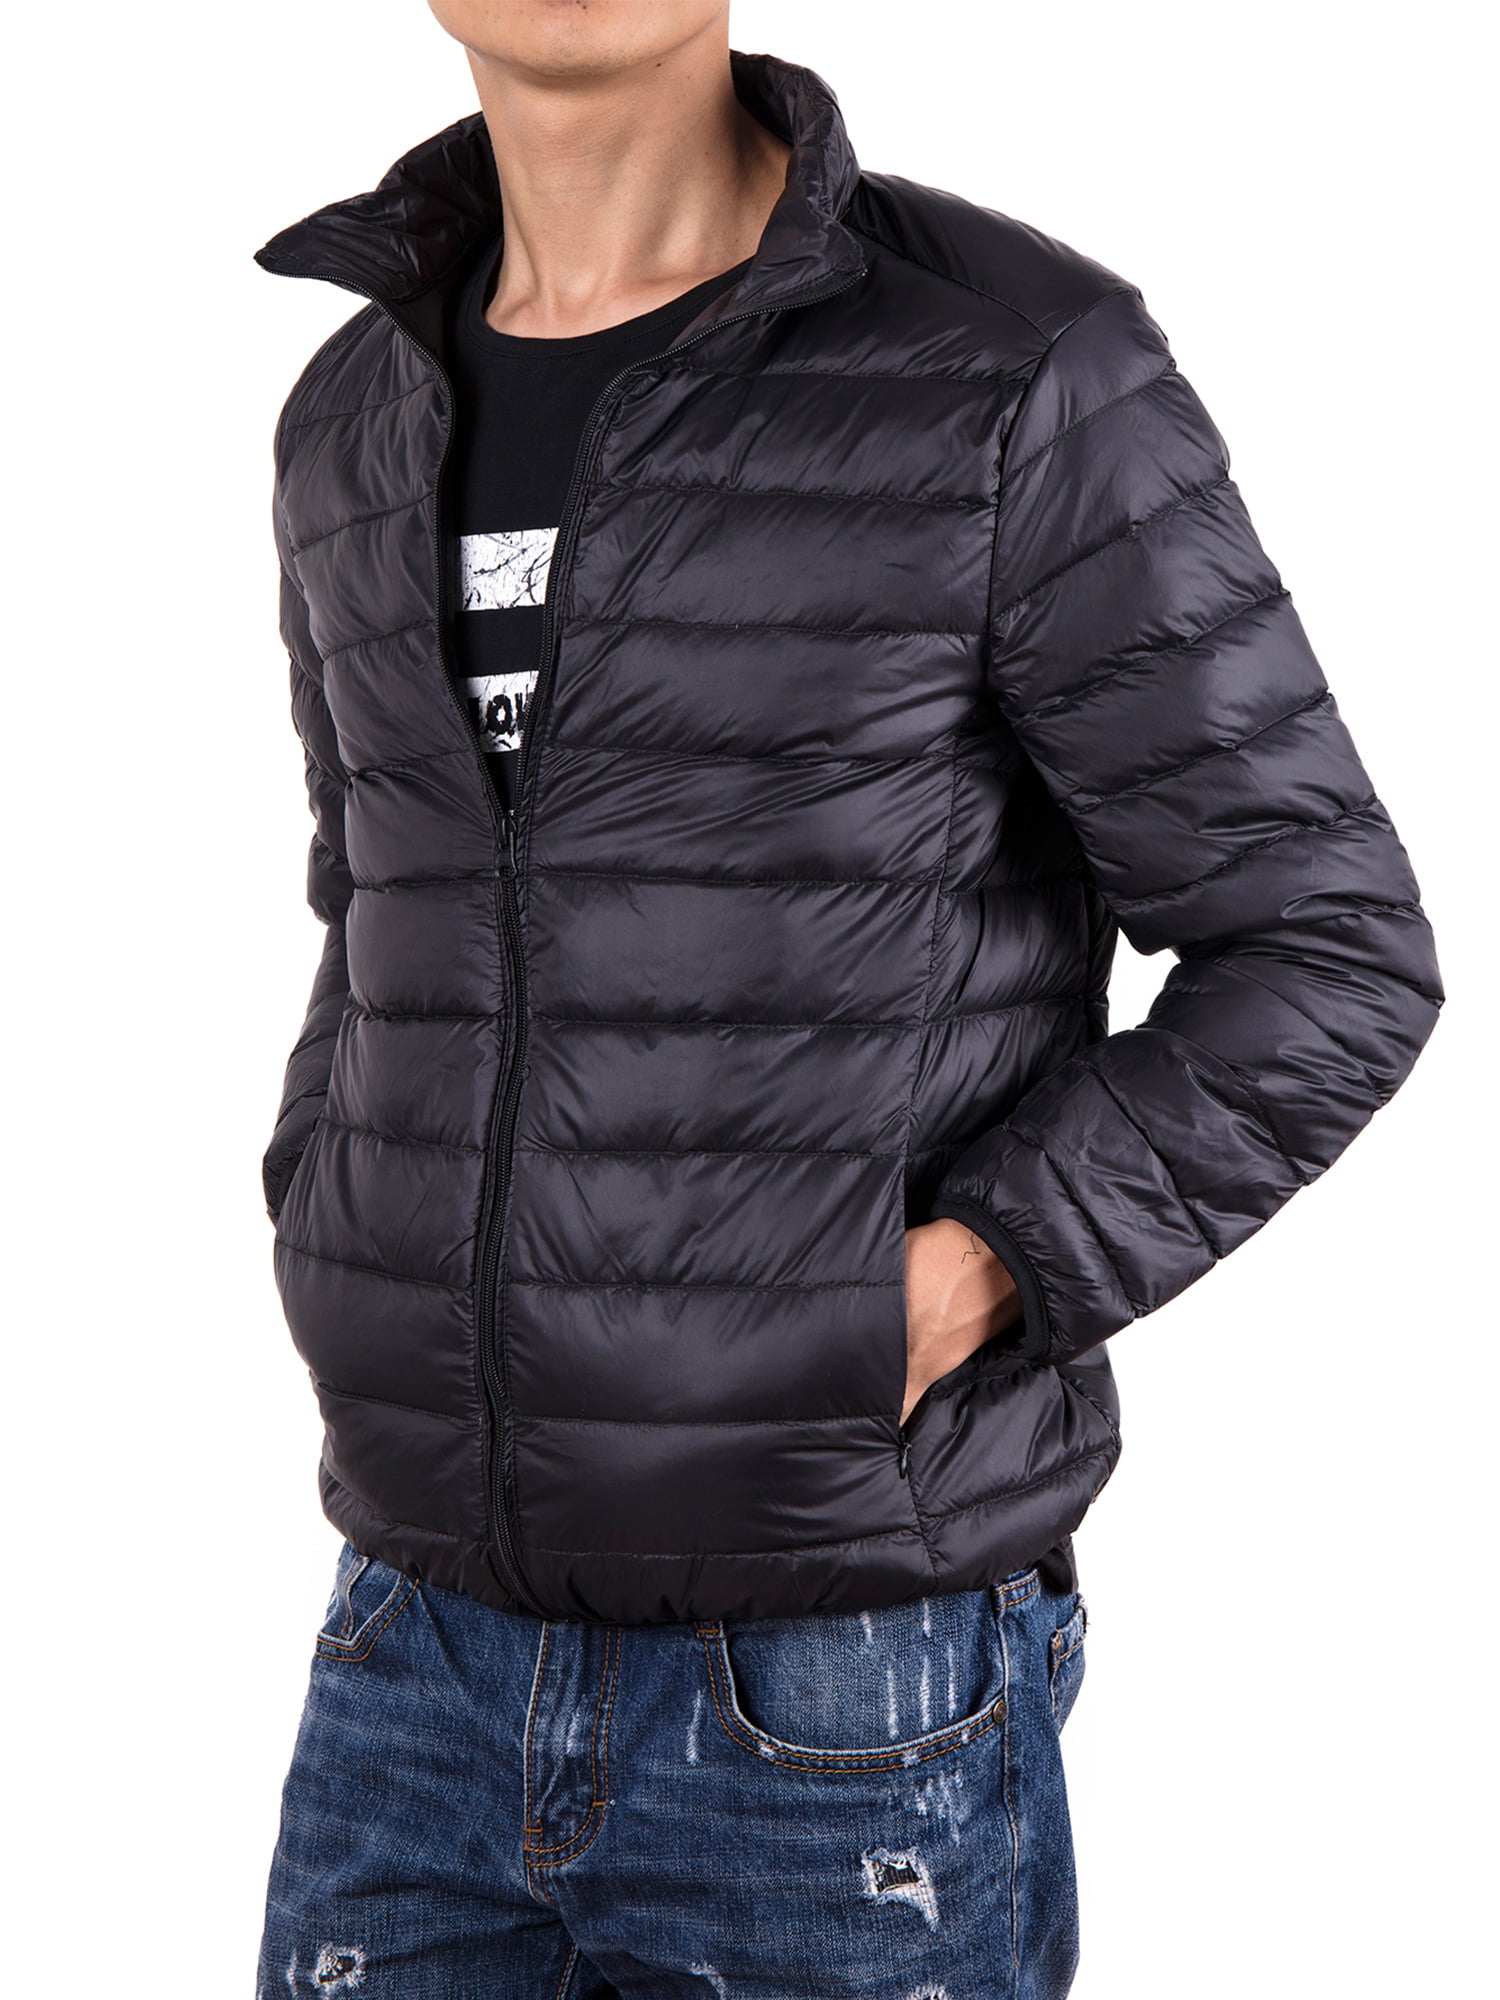 Yusky Womens Slim Casual Windbreaker Puffer Jacket with Pockets